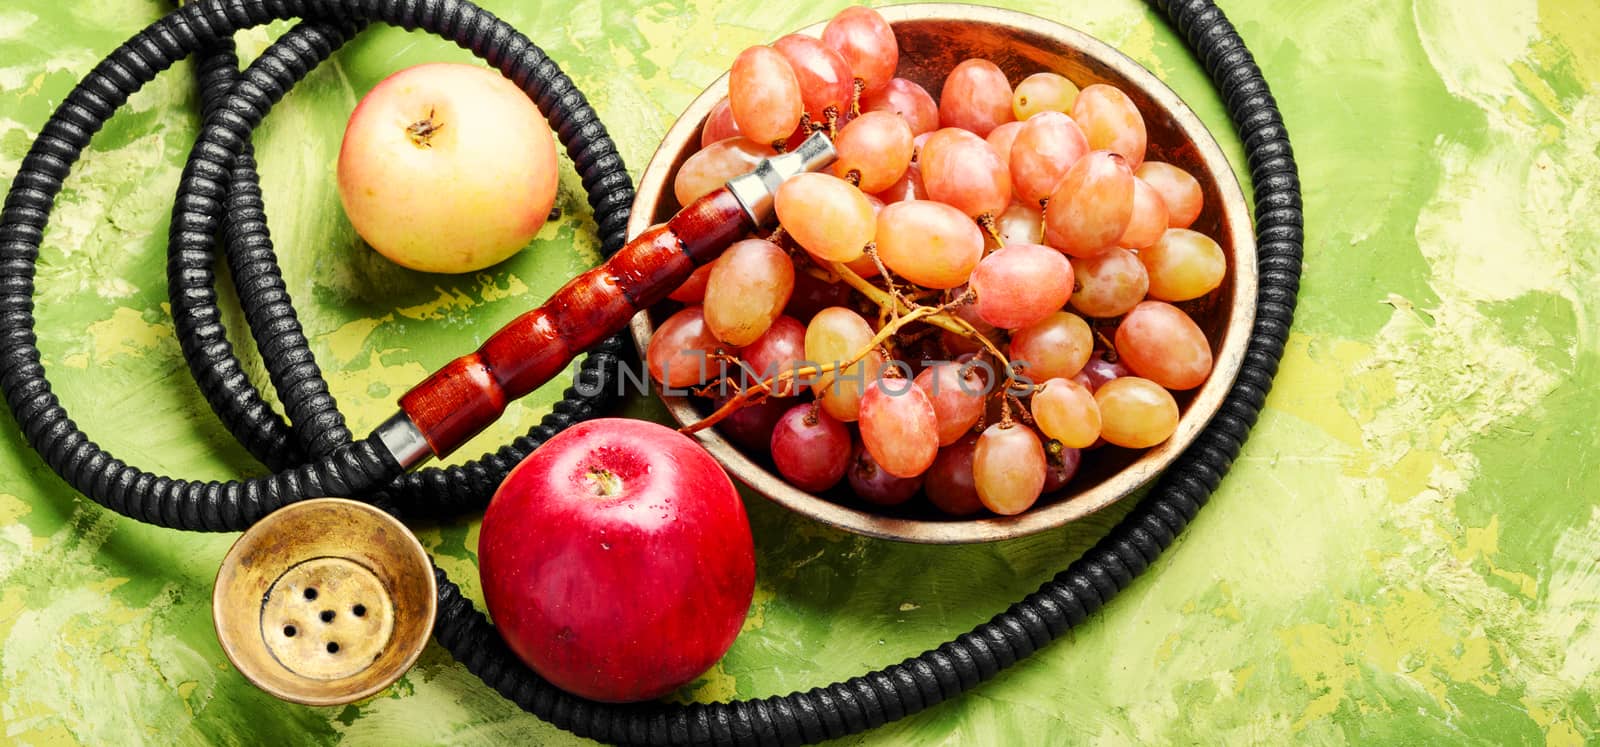 Turkish smoking hookah with taste of a fruit mixture of grapes and apples.Shisha concept. Fruit taste of hookah.